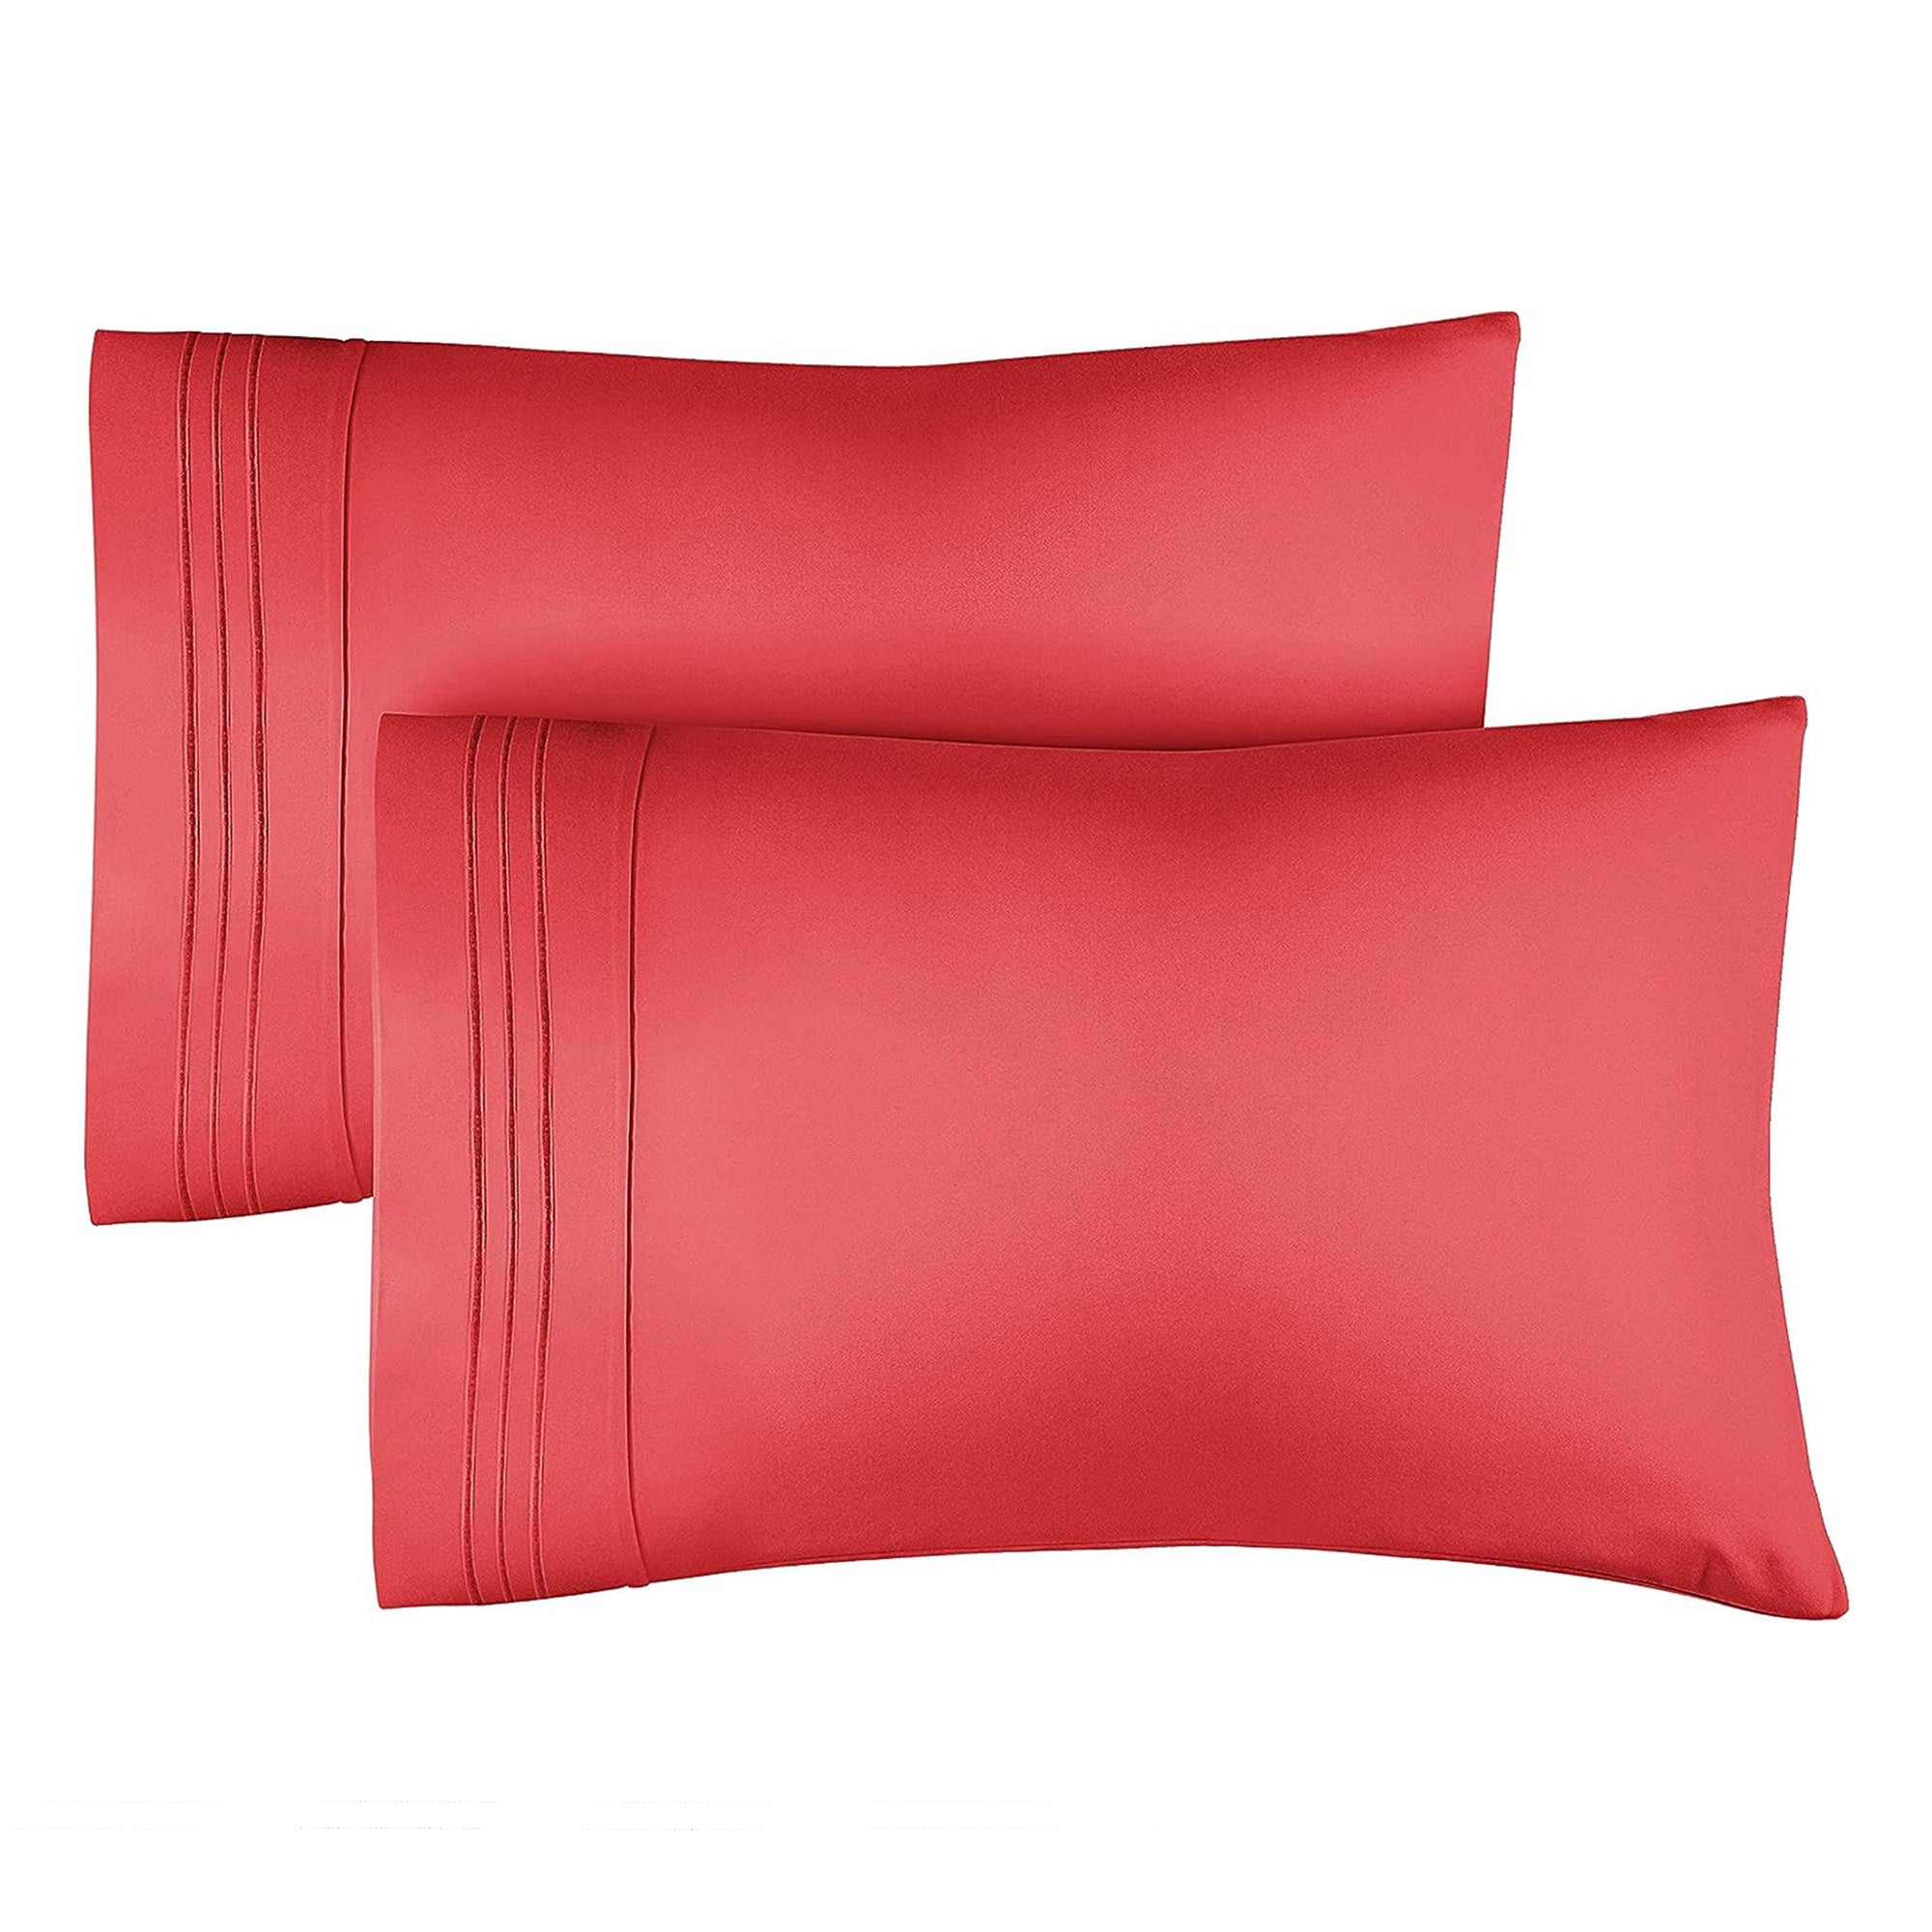 2 Pillowcase Set - Red